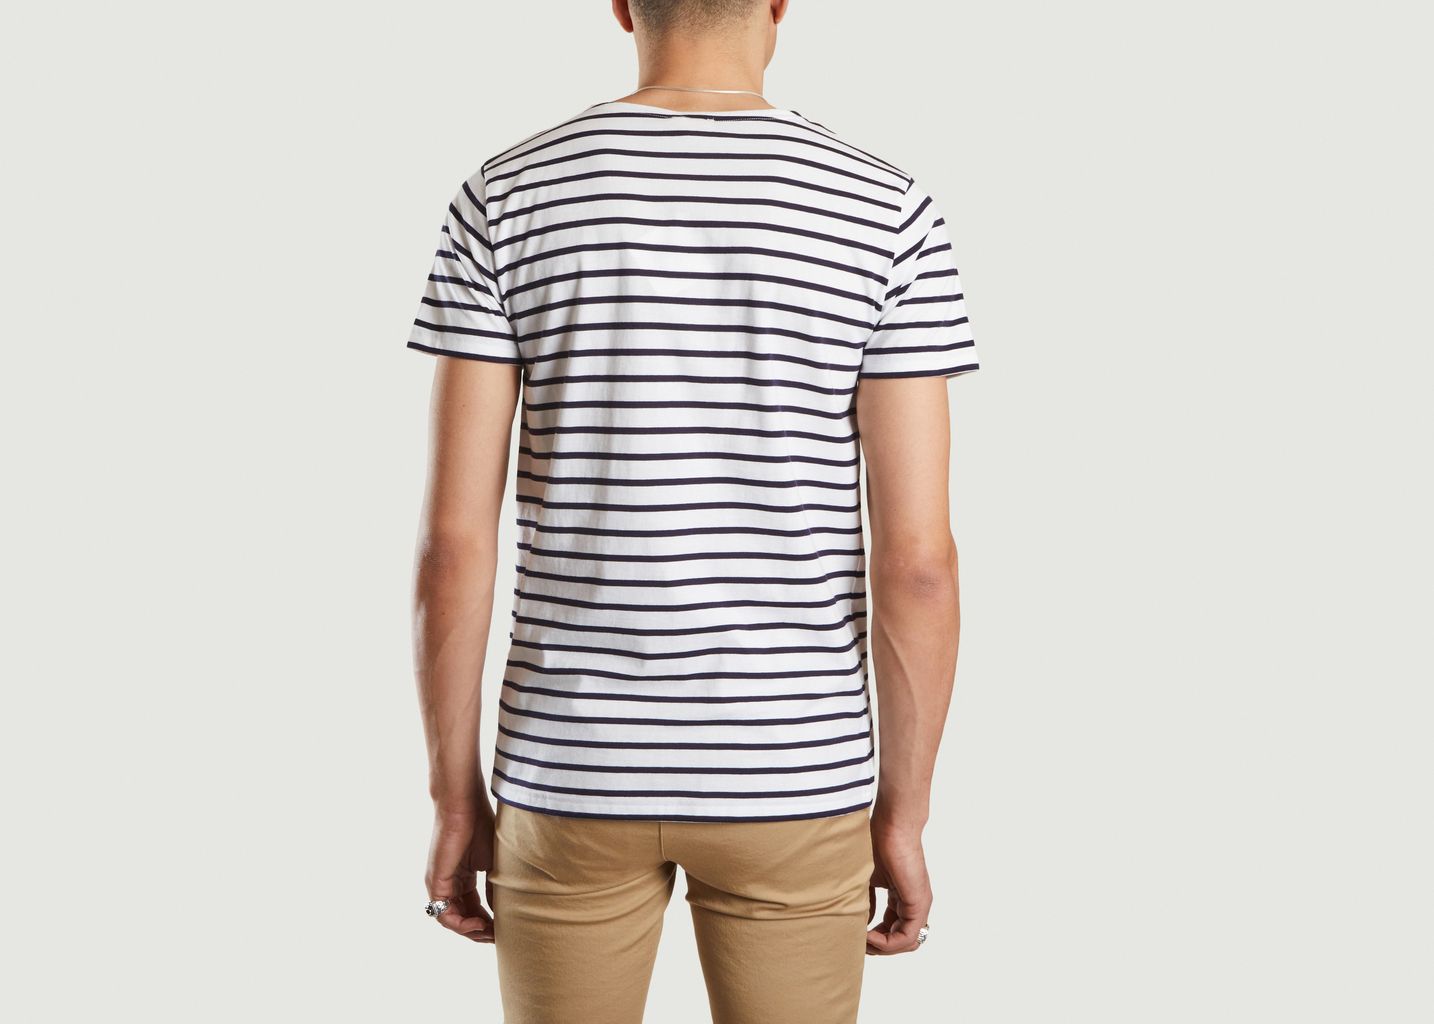 Heritage sailor T-shirt - Armor Lux